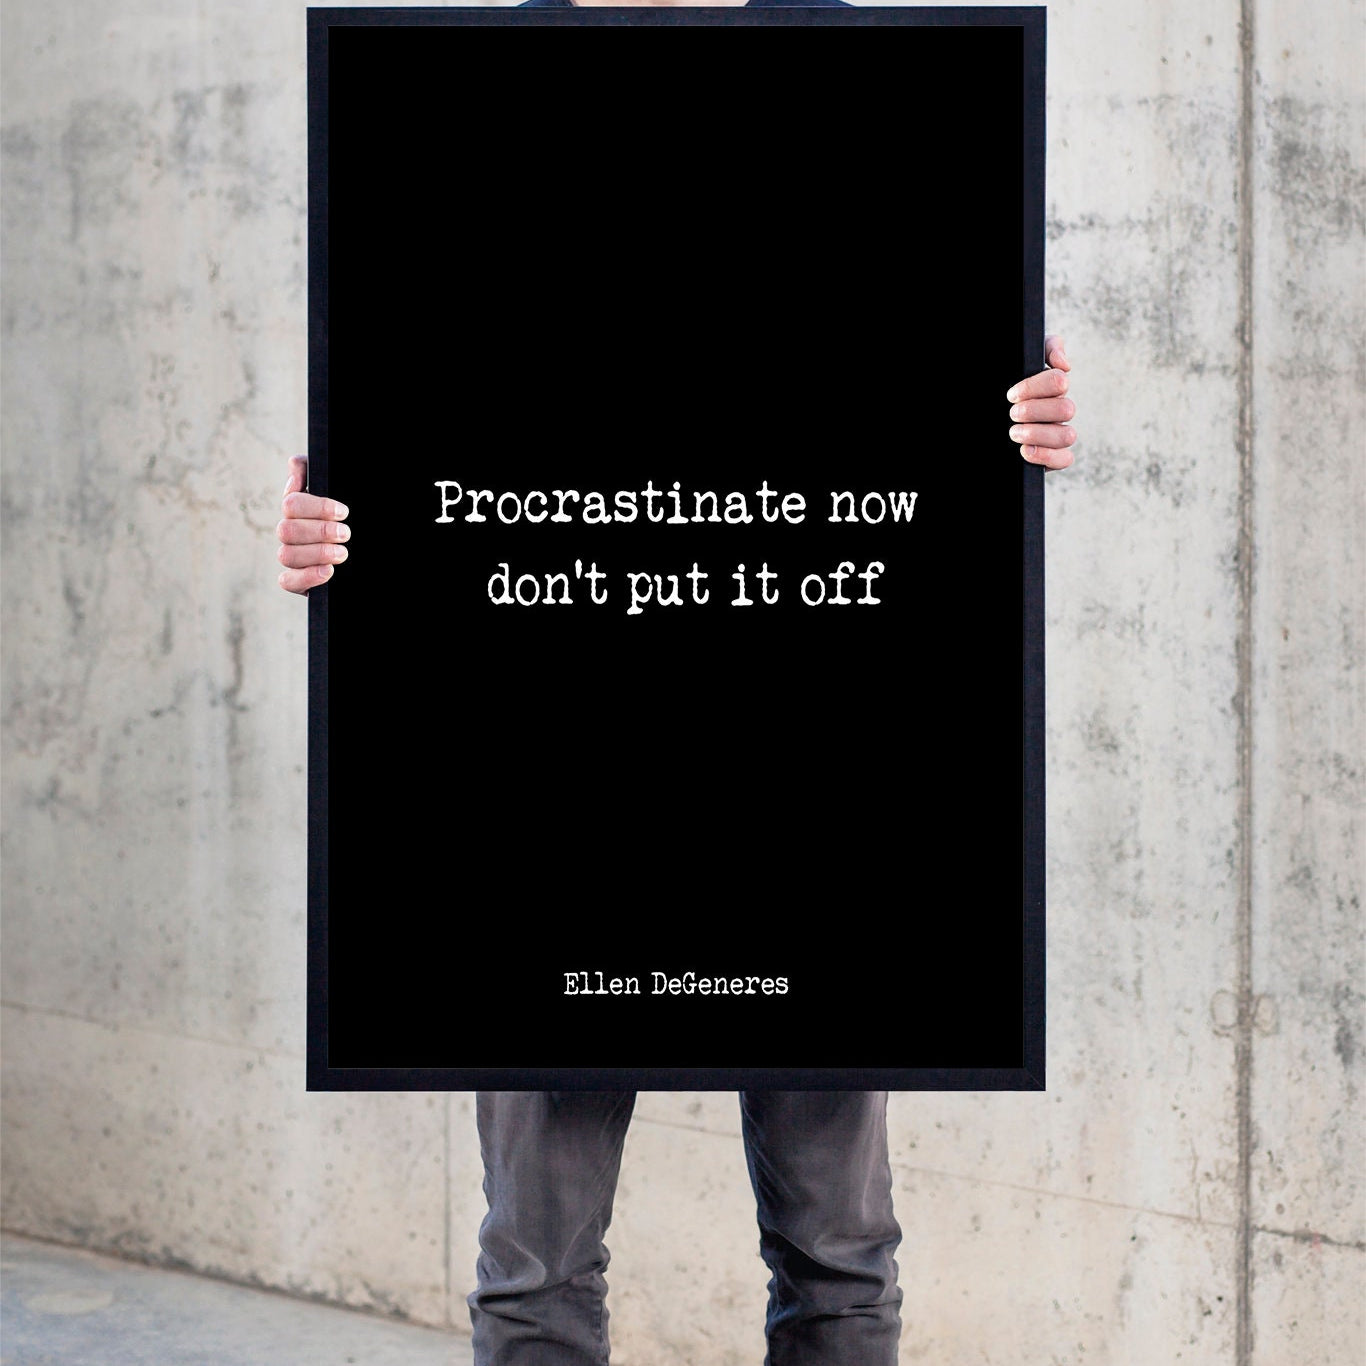 Ellen DeGeneres Quote Print. Procrastinate now, don't put it off. Funny Quote. Minimalist Art in Black & White.